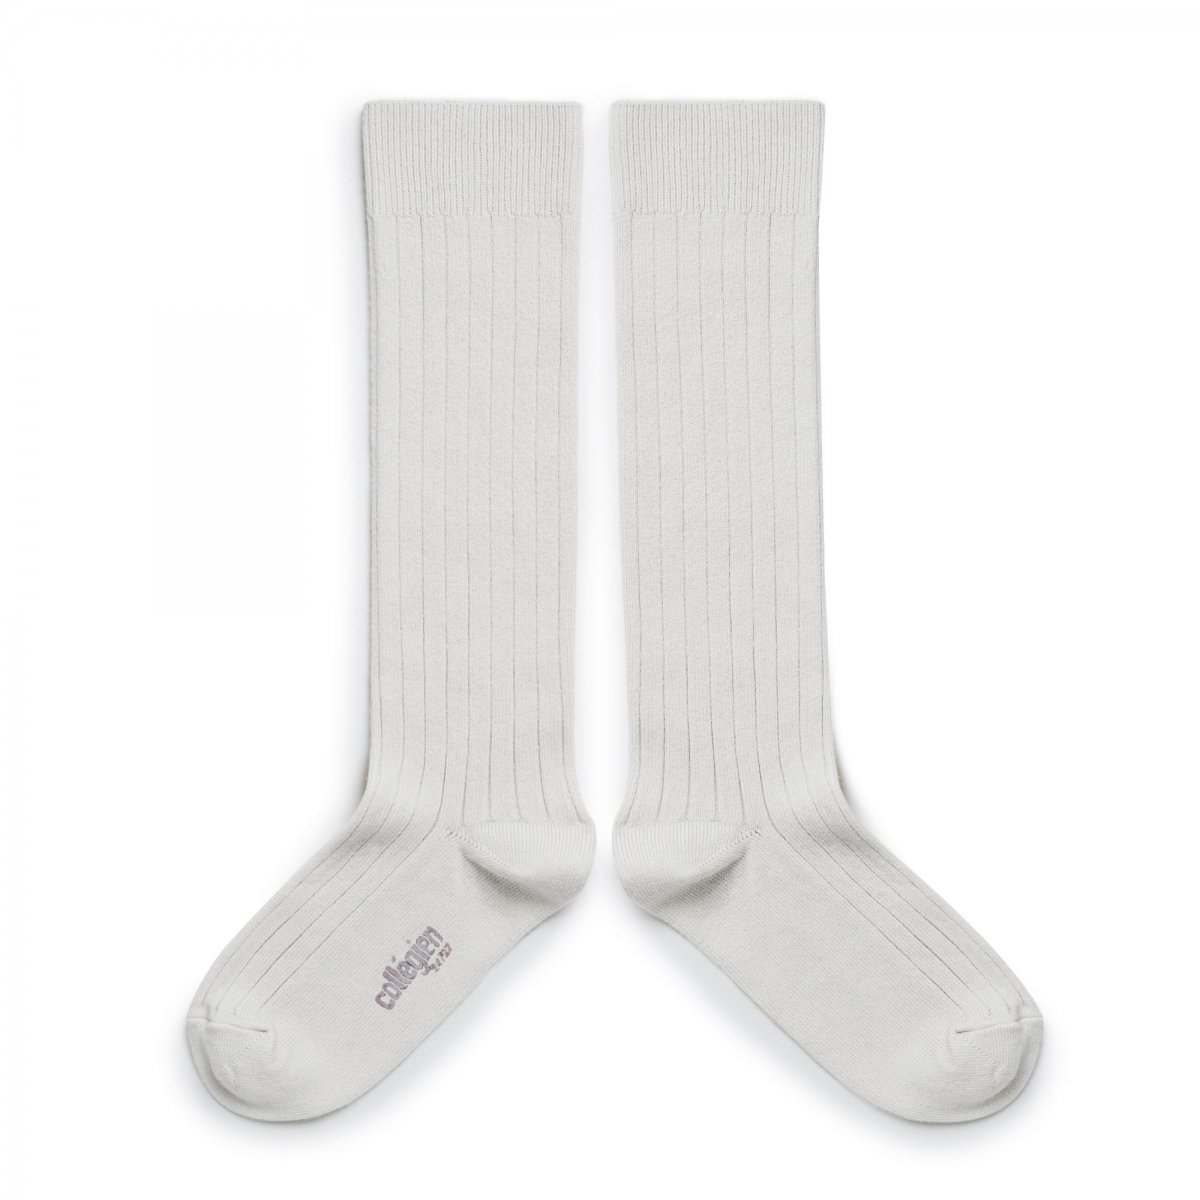 Collégien - Knee high socks La Haute blanc neige - Колготки и носки - 2950 908 La Haute 